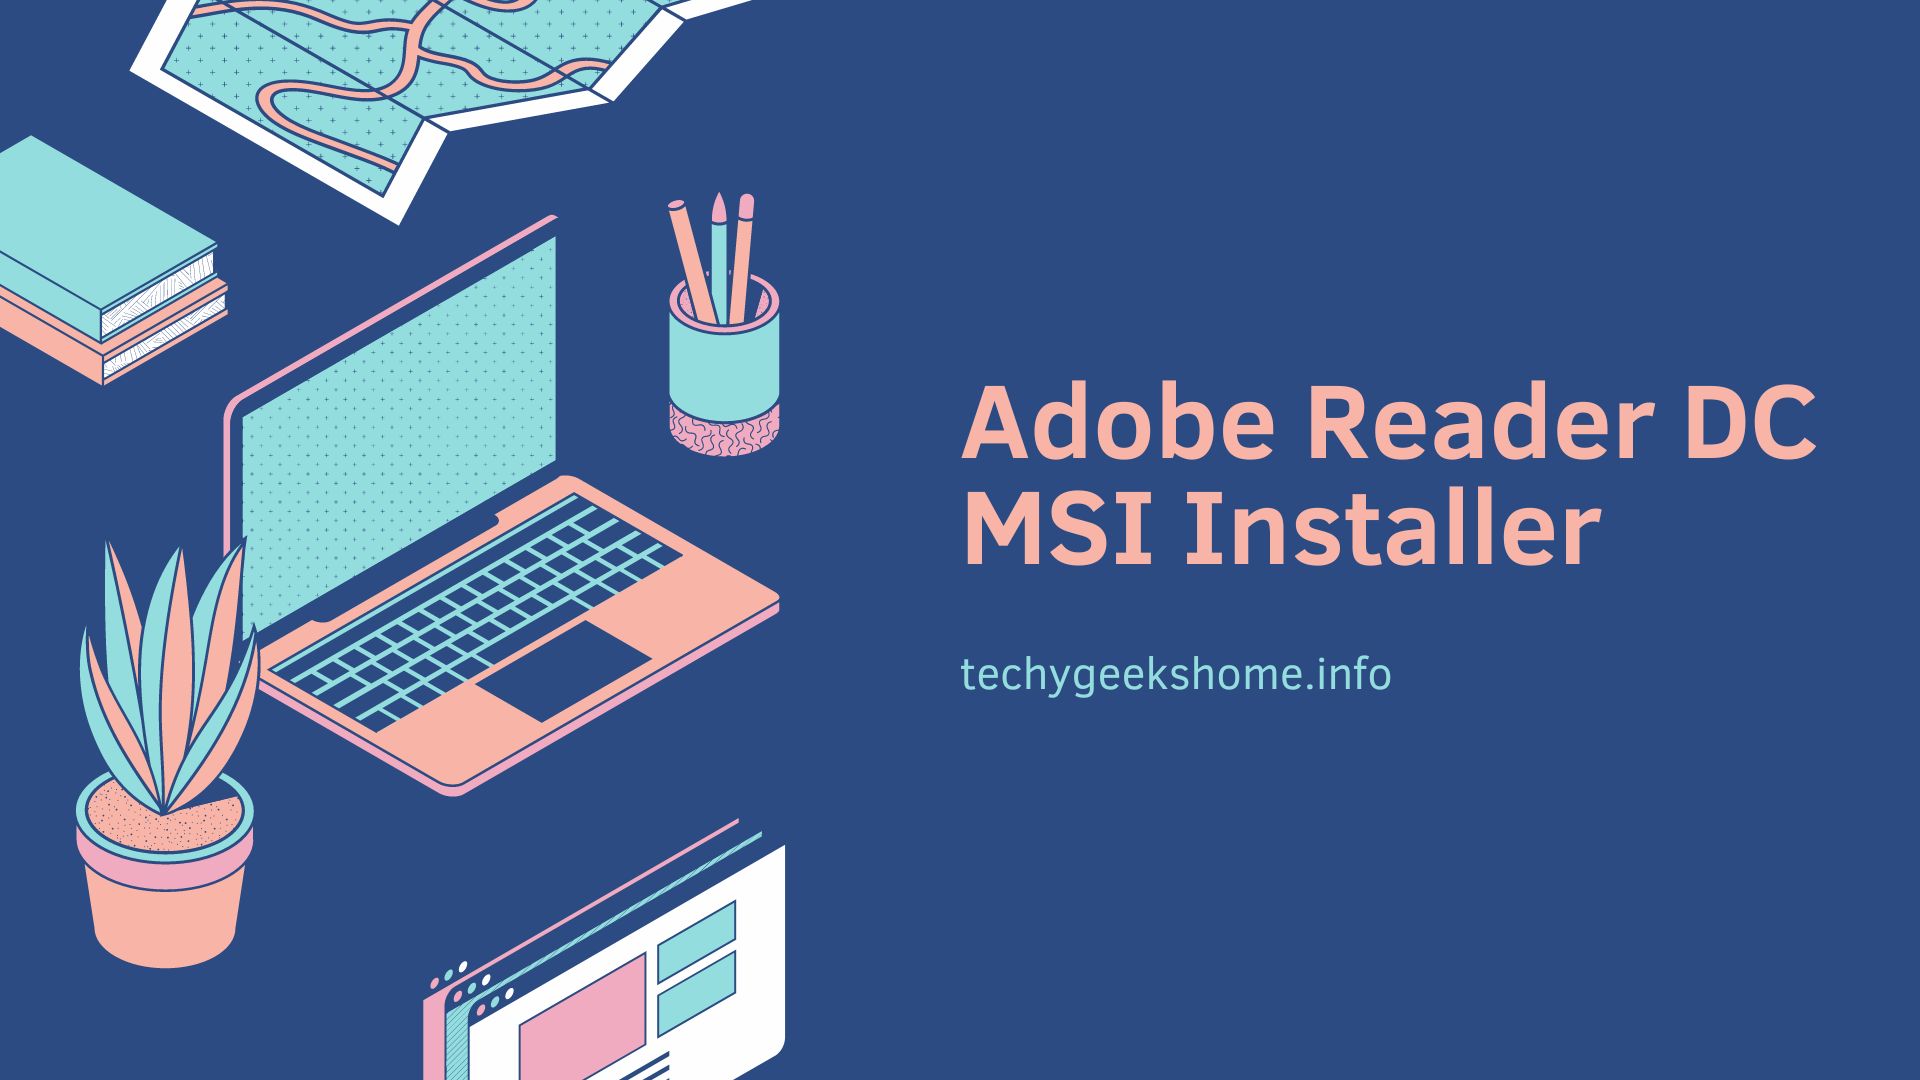 Adobe Reader DC MSI Installer